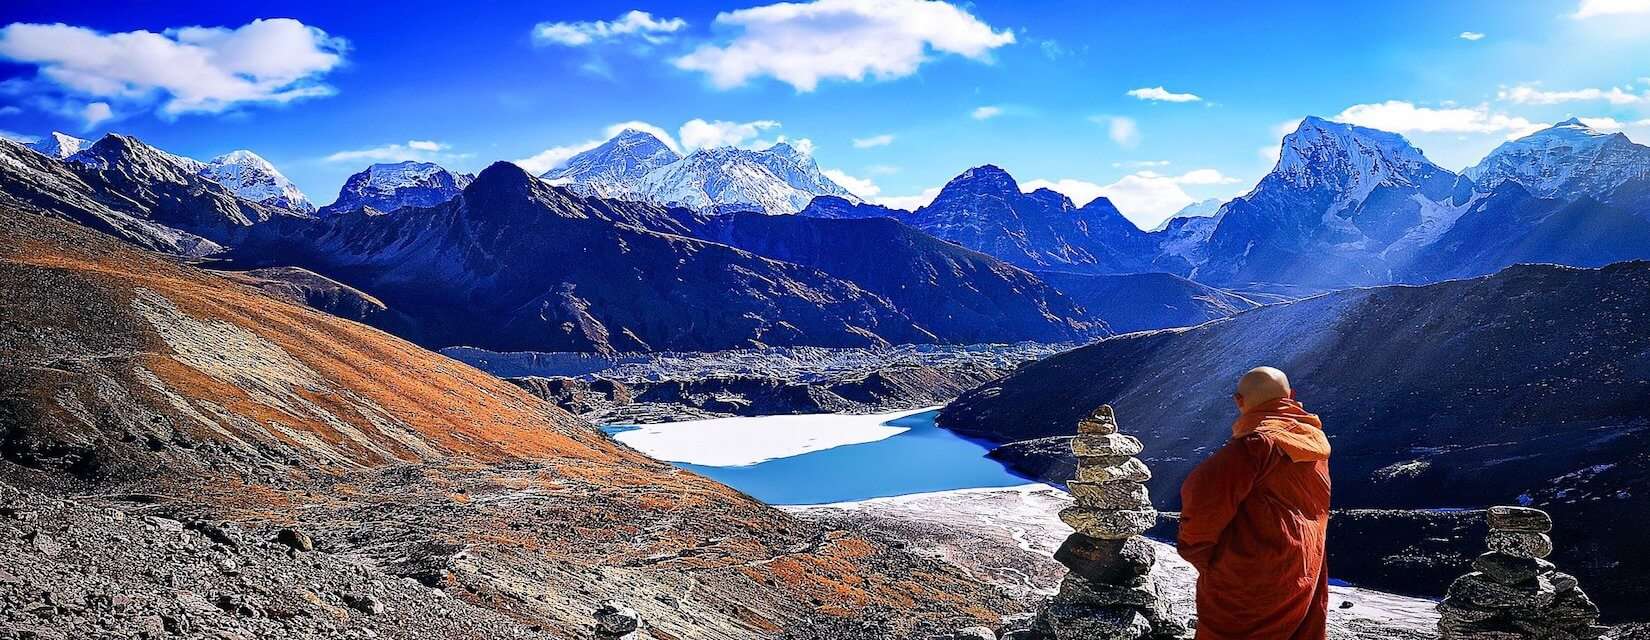 Mount Everest Base Camp via Gokyo Lake and Cho La Pass Trek